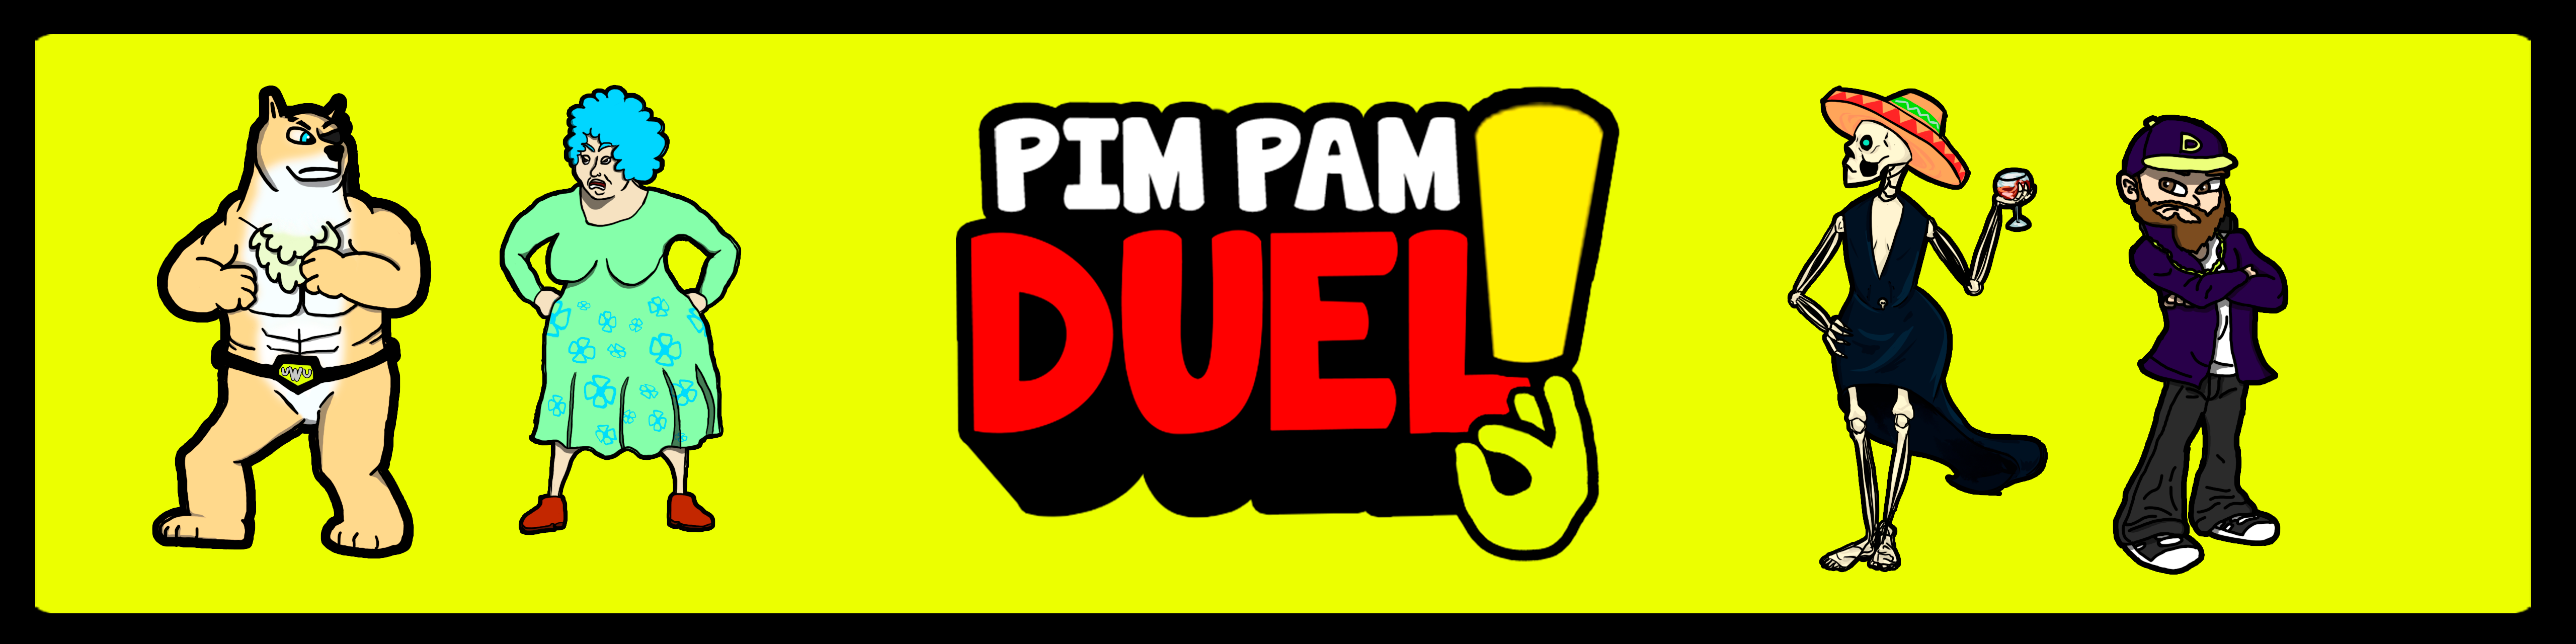 Pim Pam Duel!